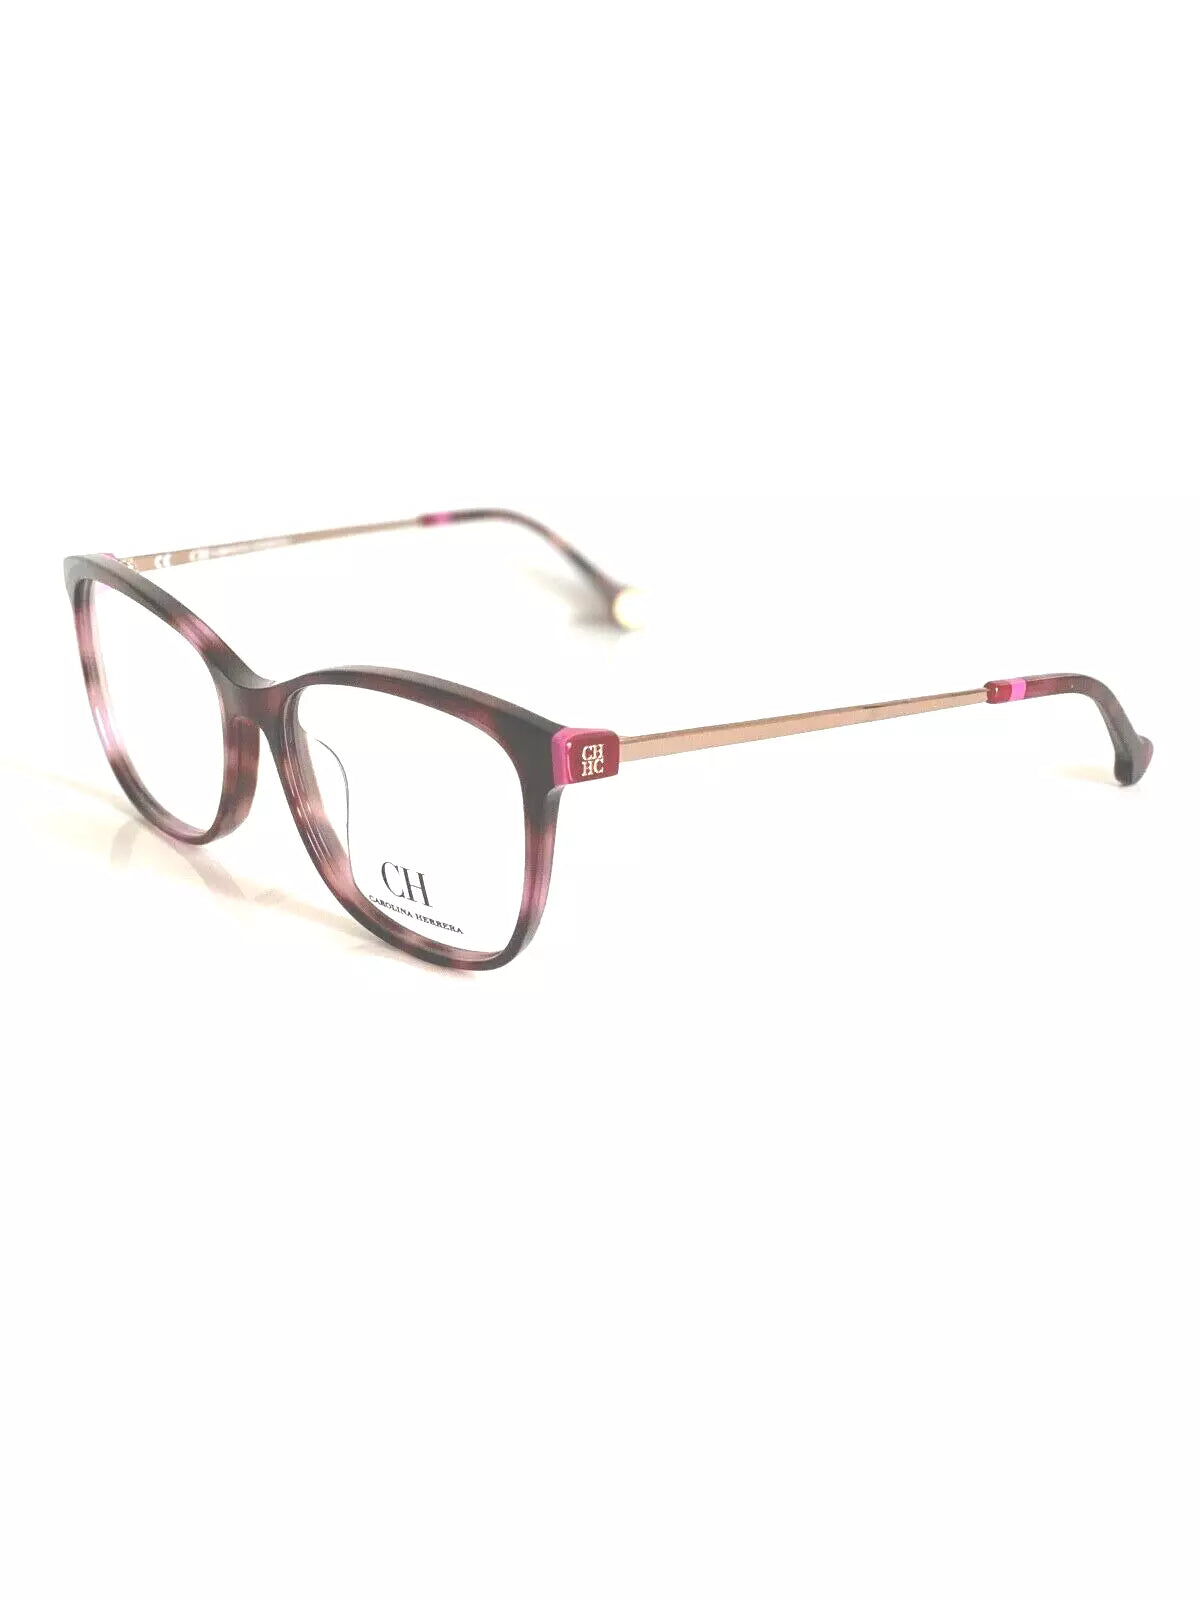 Carolina Herrera VHE818-0752-54 54mm New Eyeglasses